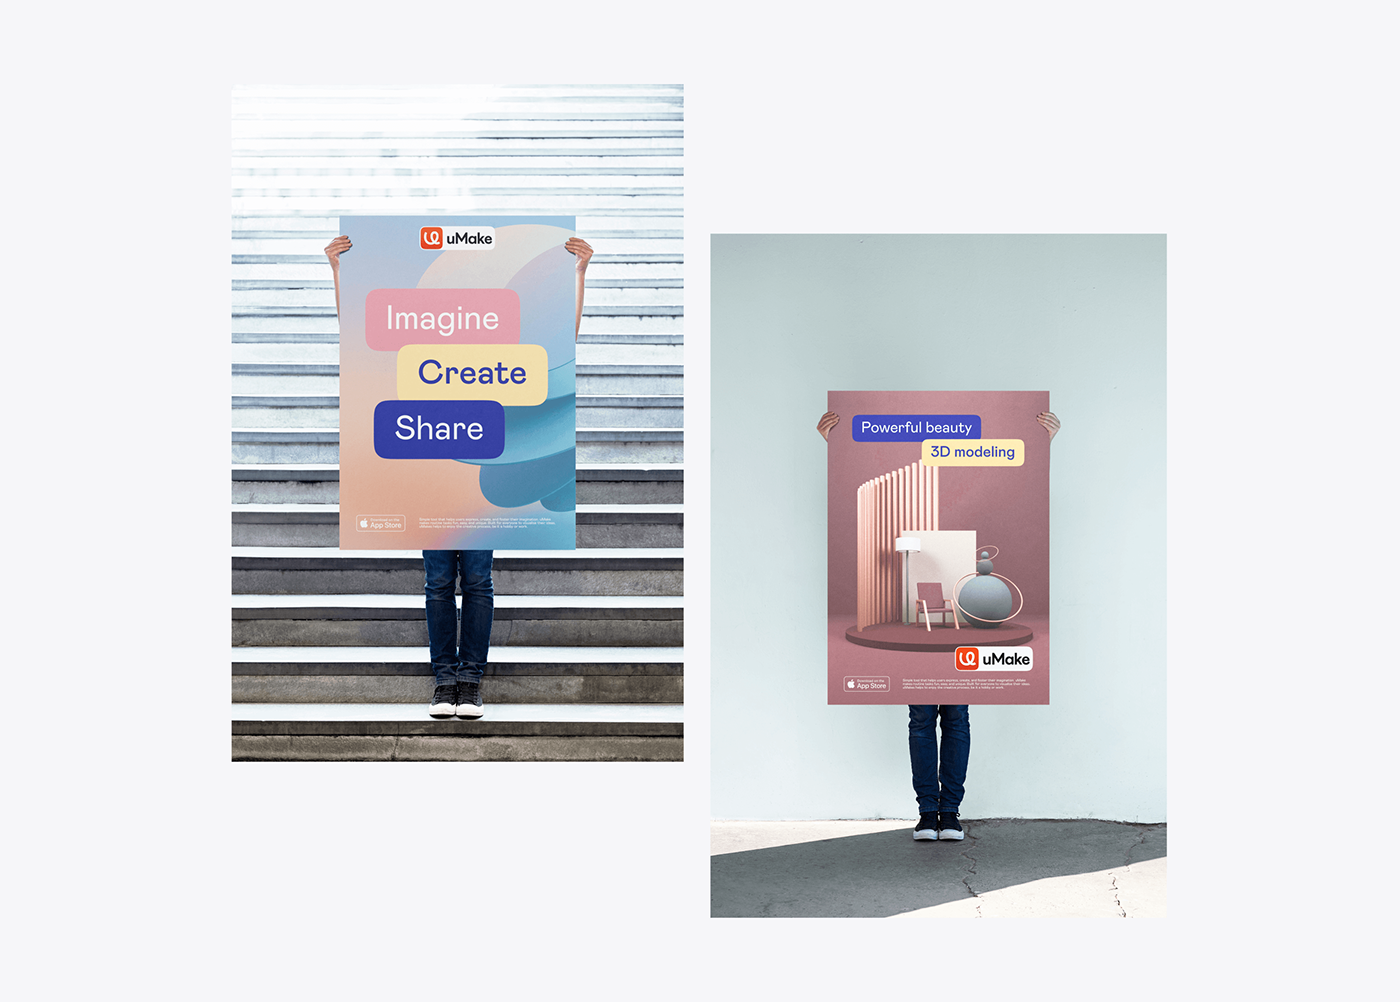 posters design for uMake design tool by tubik